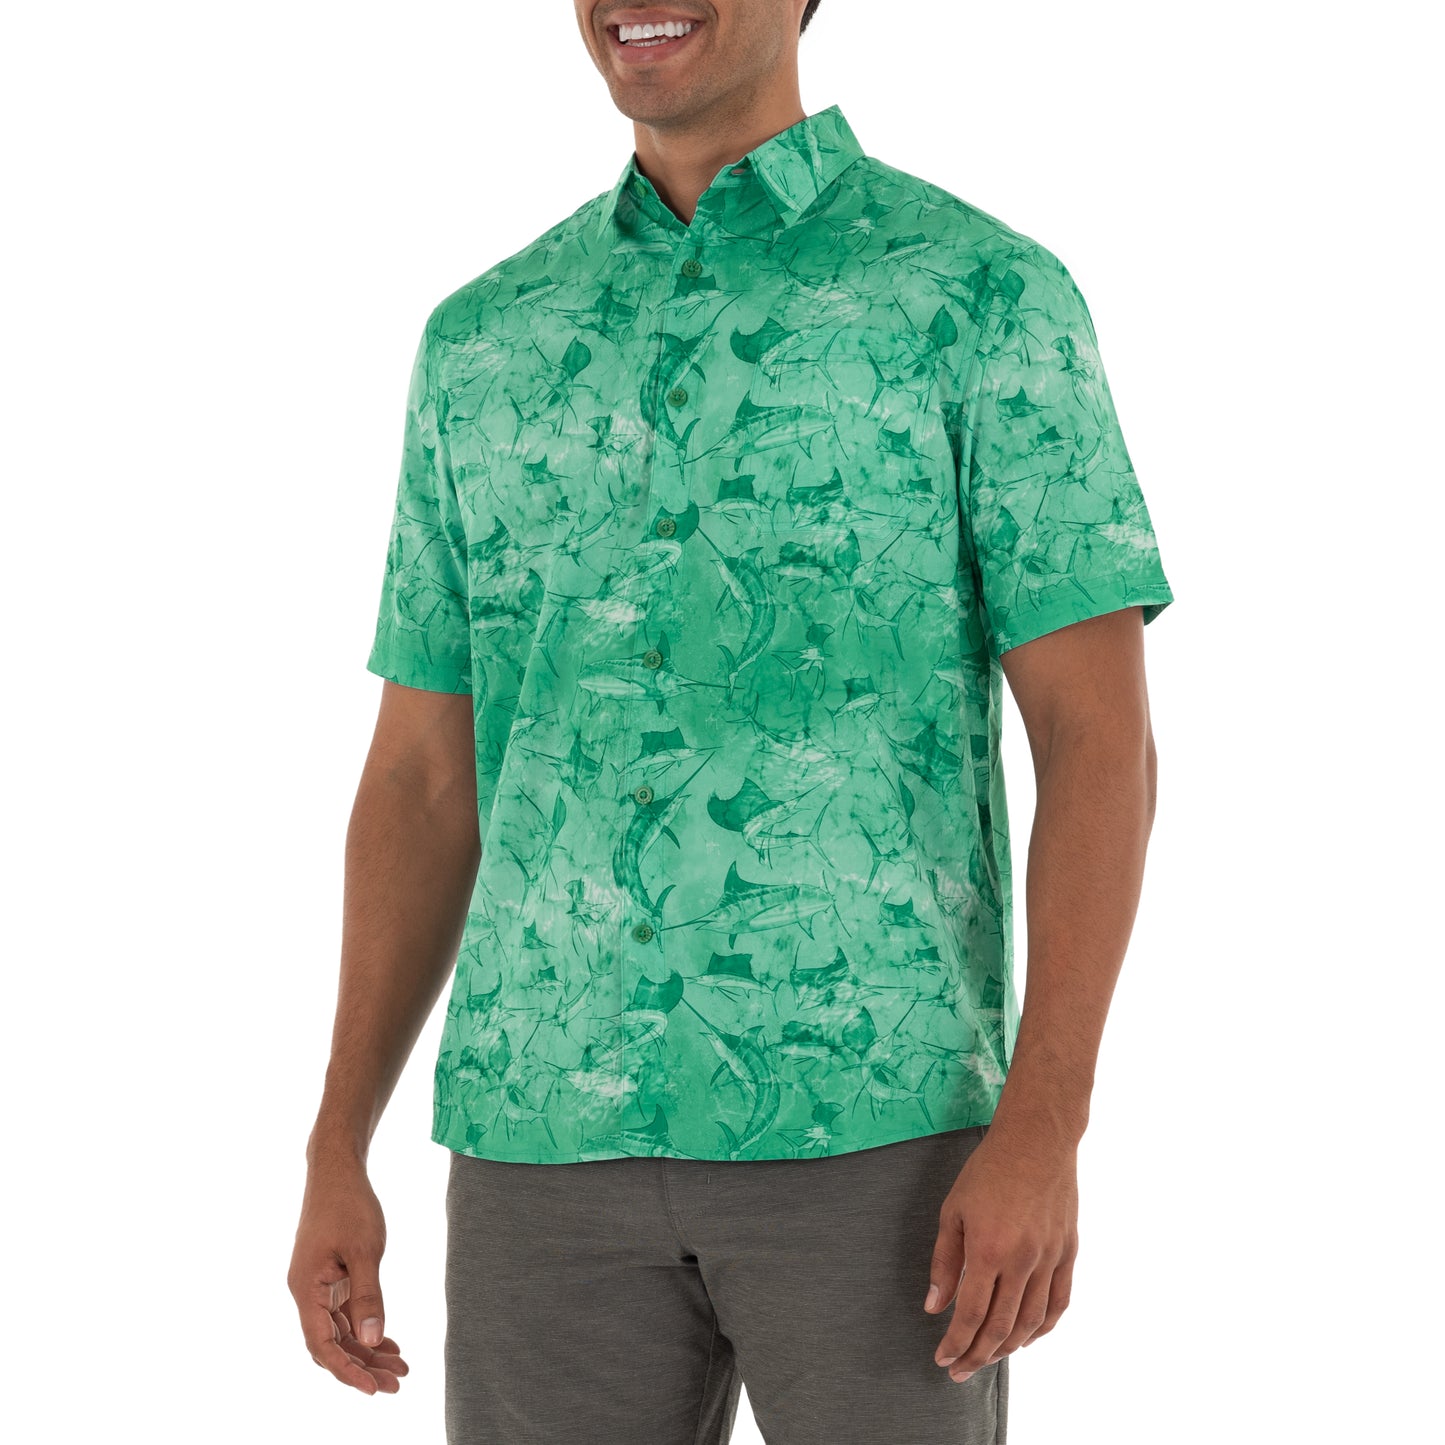 Men's Short Sleeve Printed Turquoise Fishing Shirt View 6